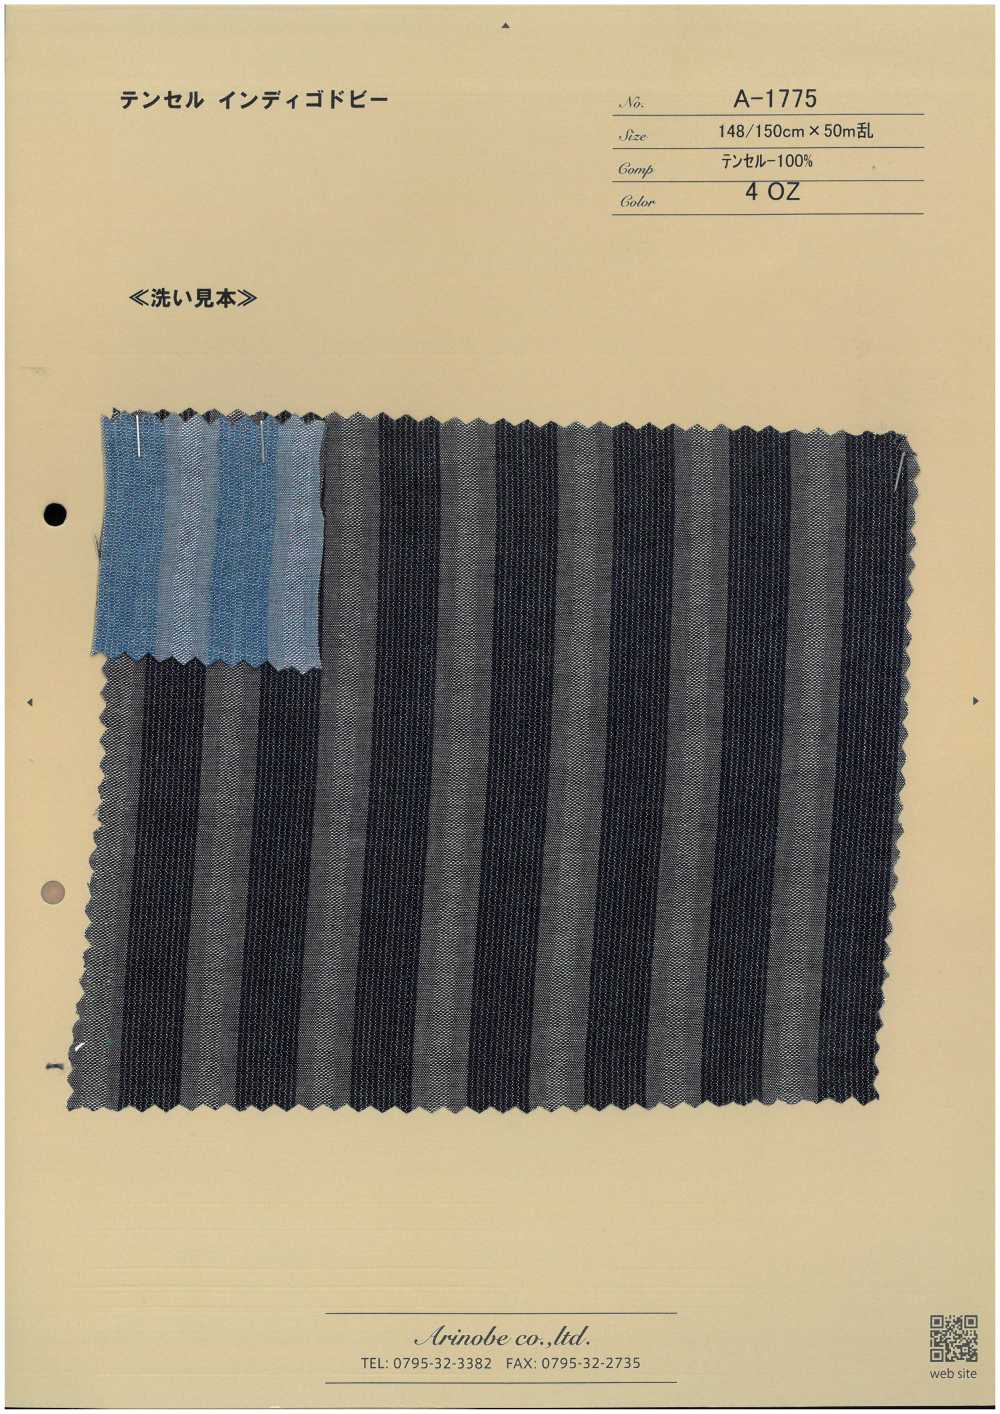 A-1775 Dobby Tencel Índigo[Fabrica Textil] ARINOBE CO., LTD.